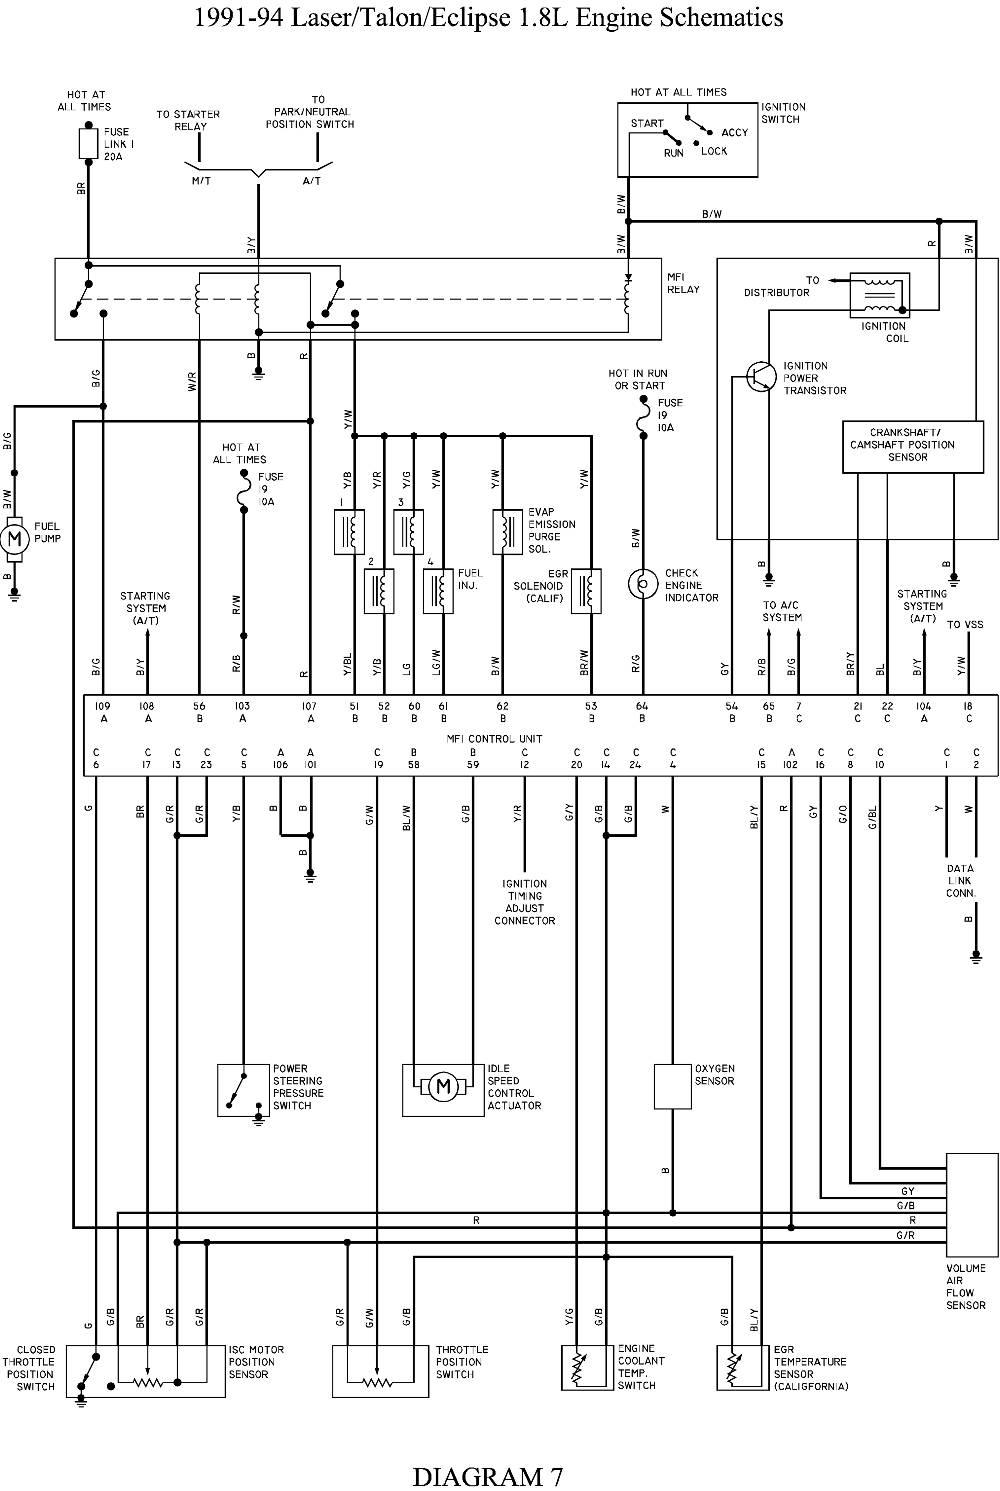 1990 Plymouth Laser Headlight Door Wiring Diagram from econtent.autozone.com